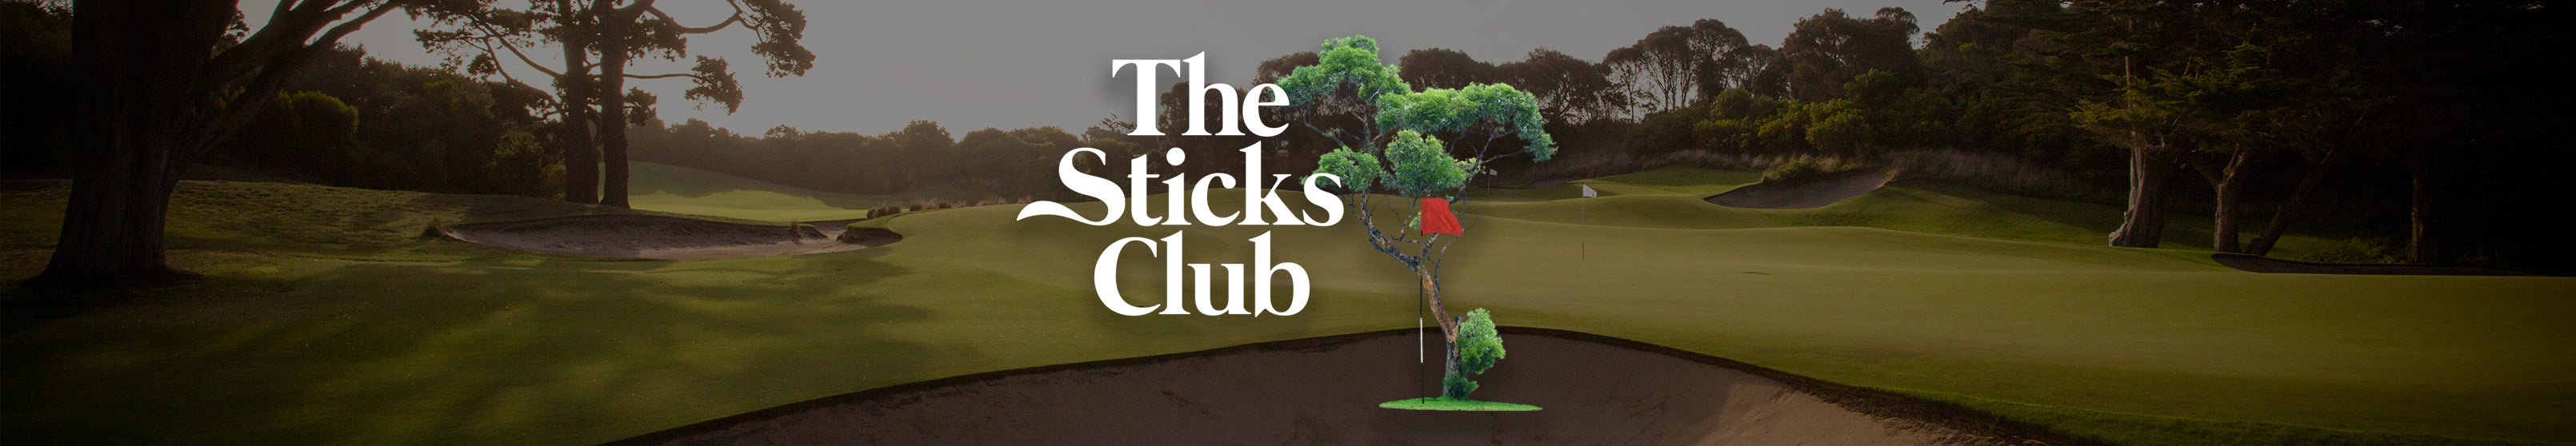 The Sticks Club